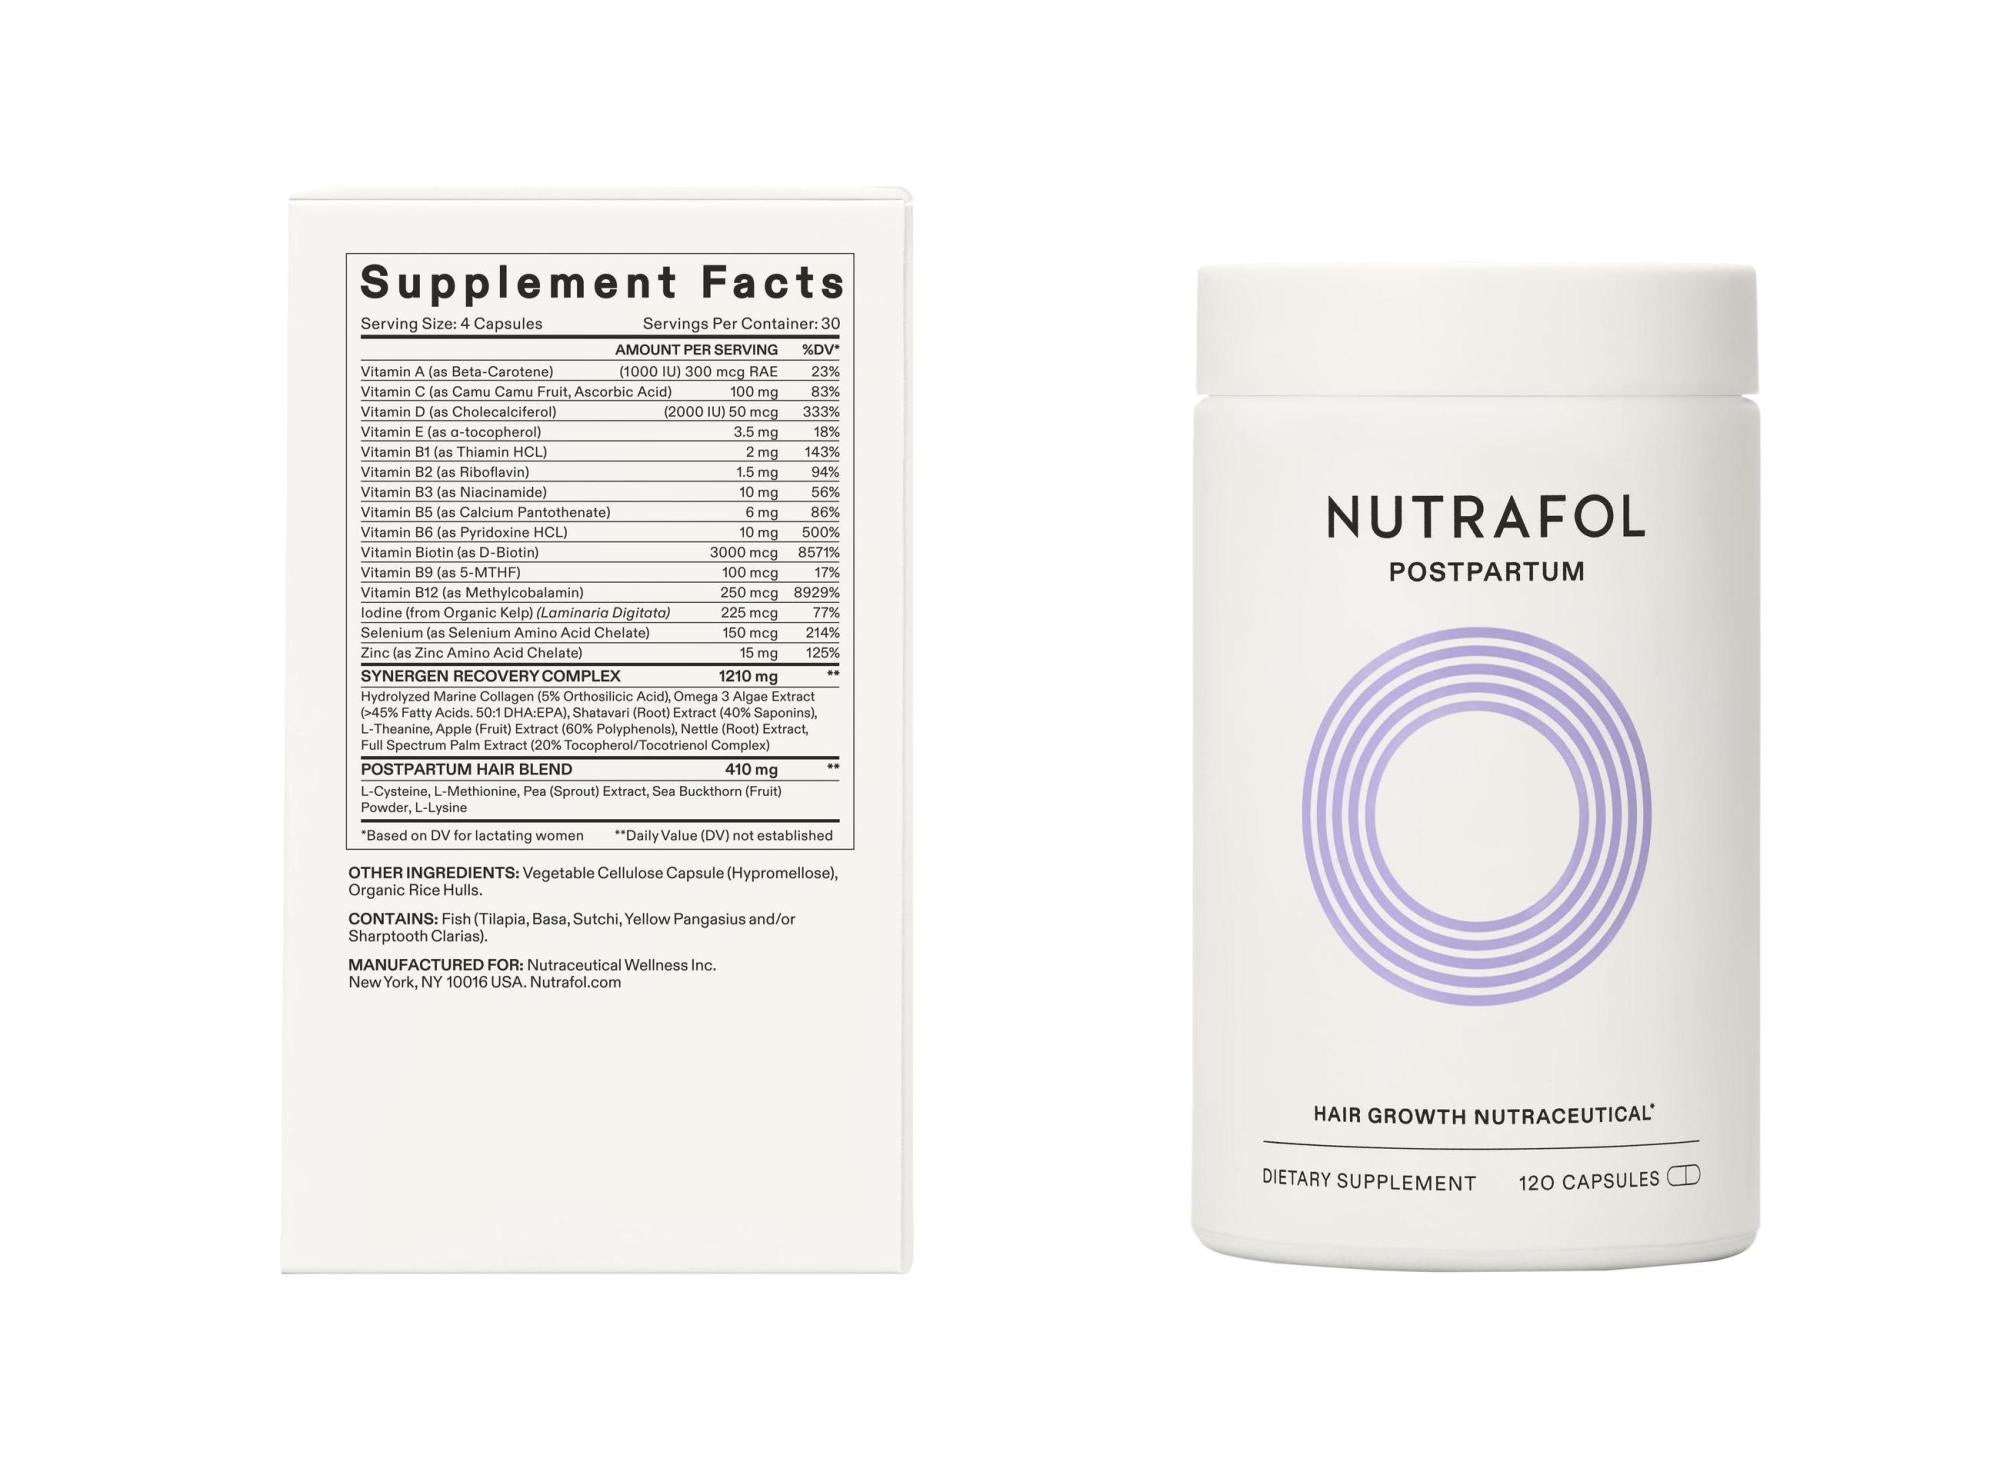 Nutrafol Postpartum Hair Growth Nutraceutical (120 Capsules)